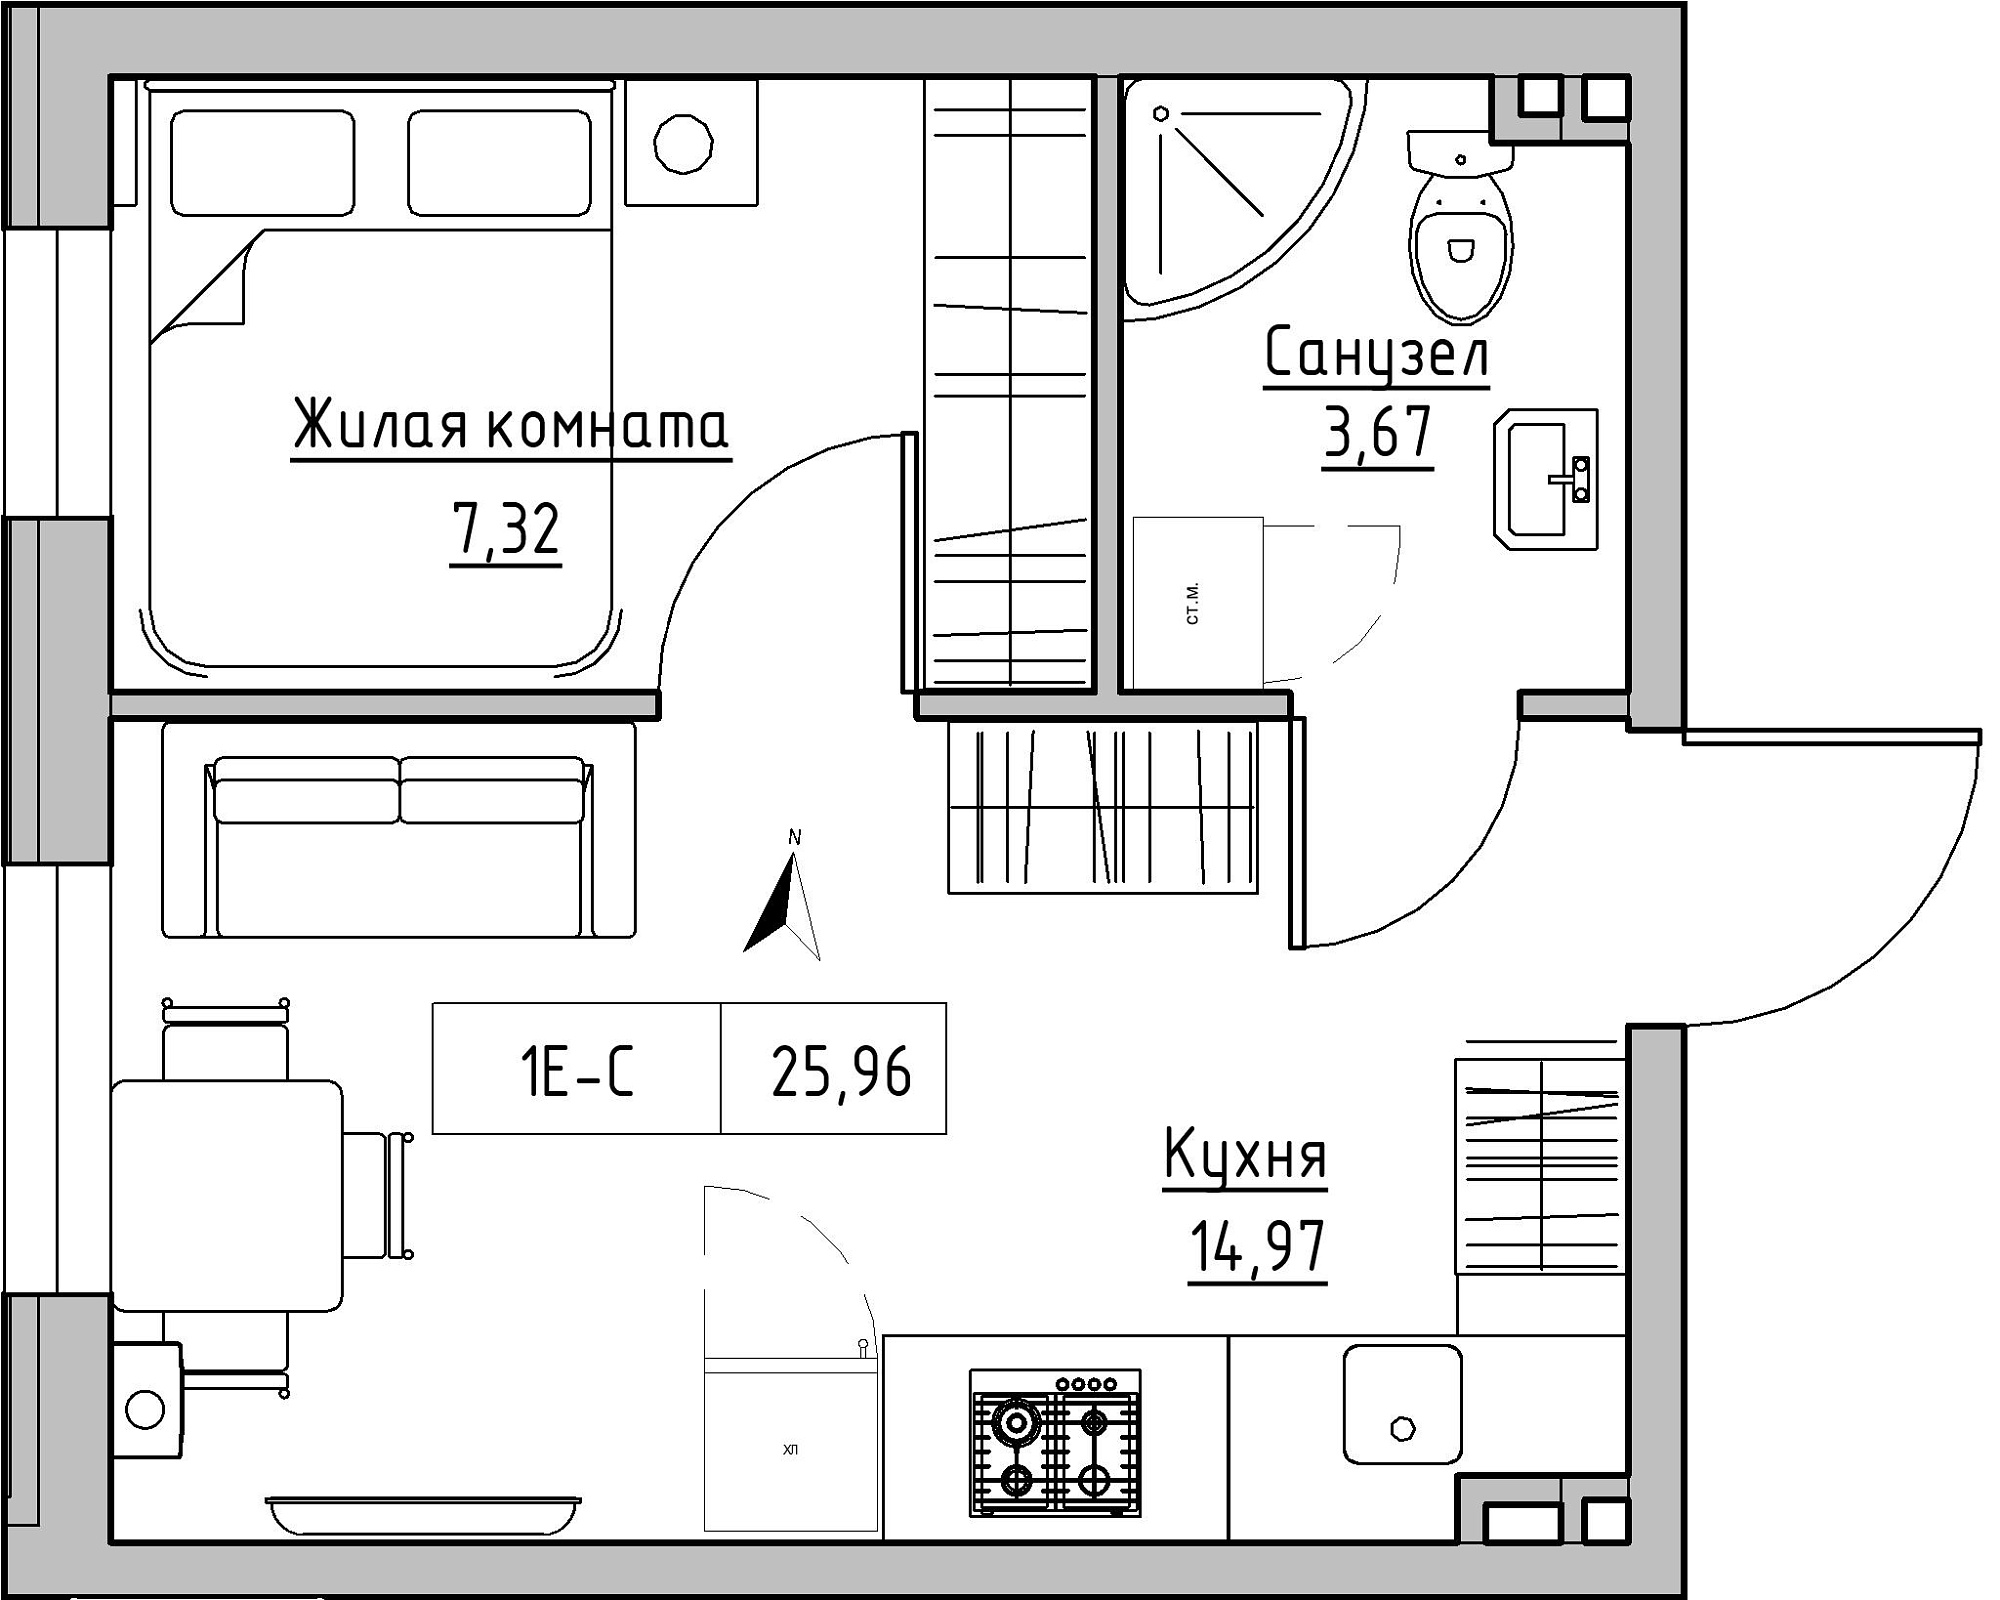 Planning 1-rm flats area 25.96m2, KS-024-01/0012.